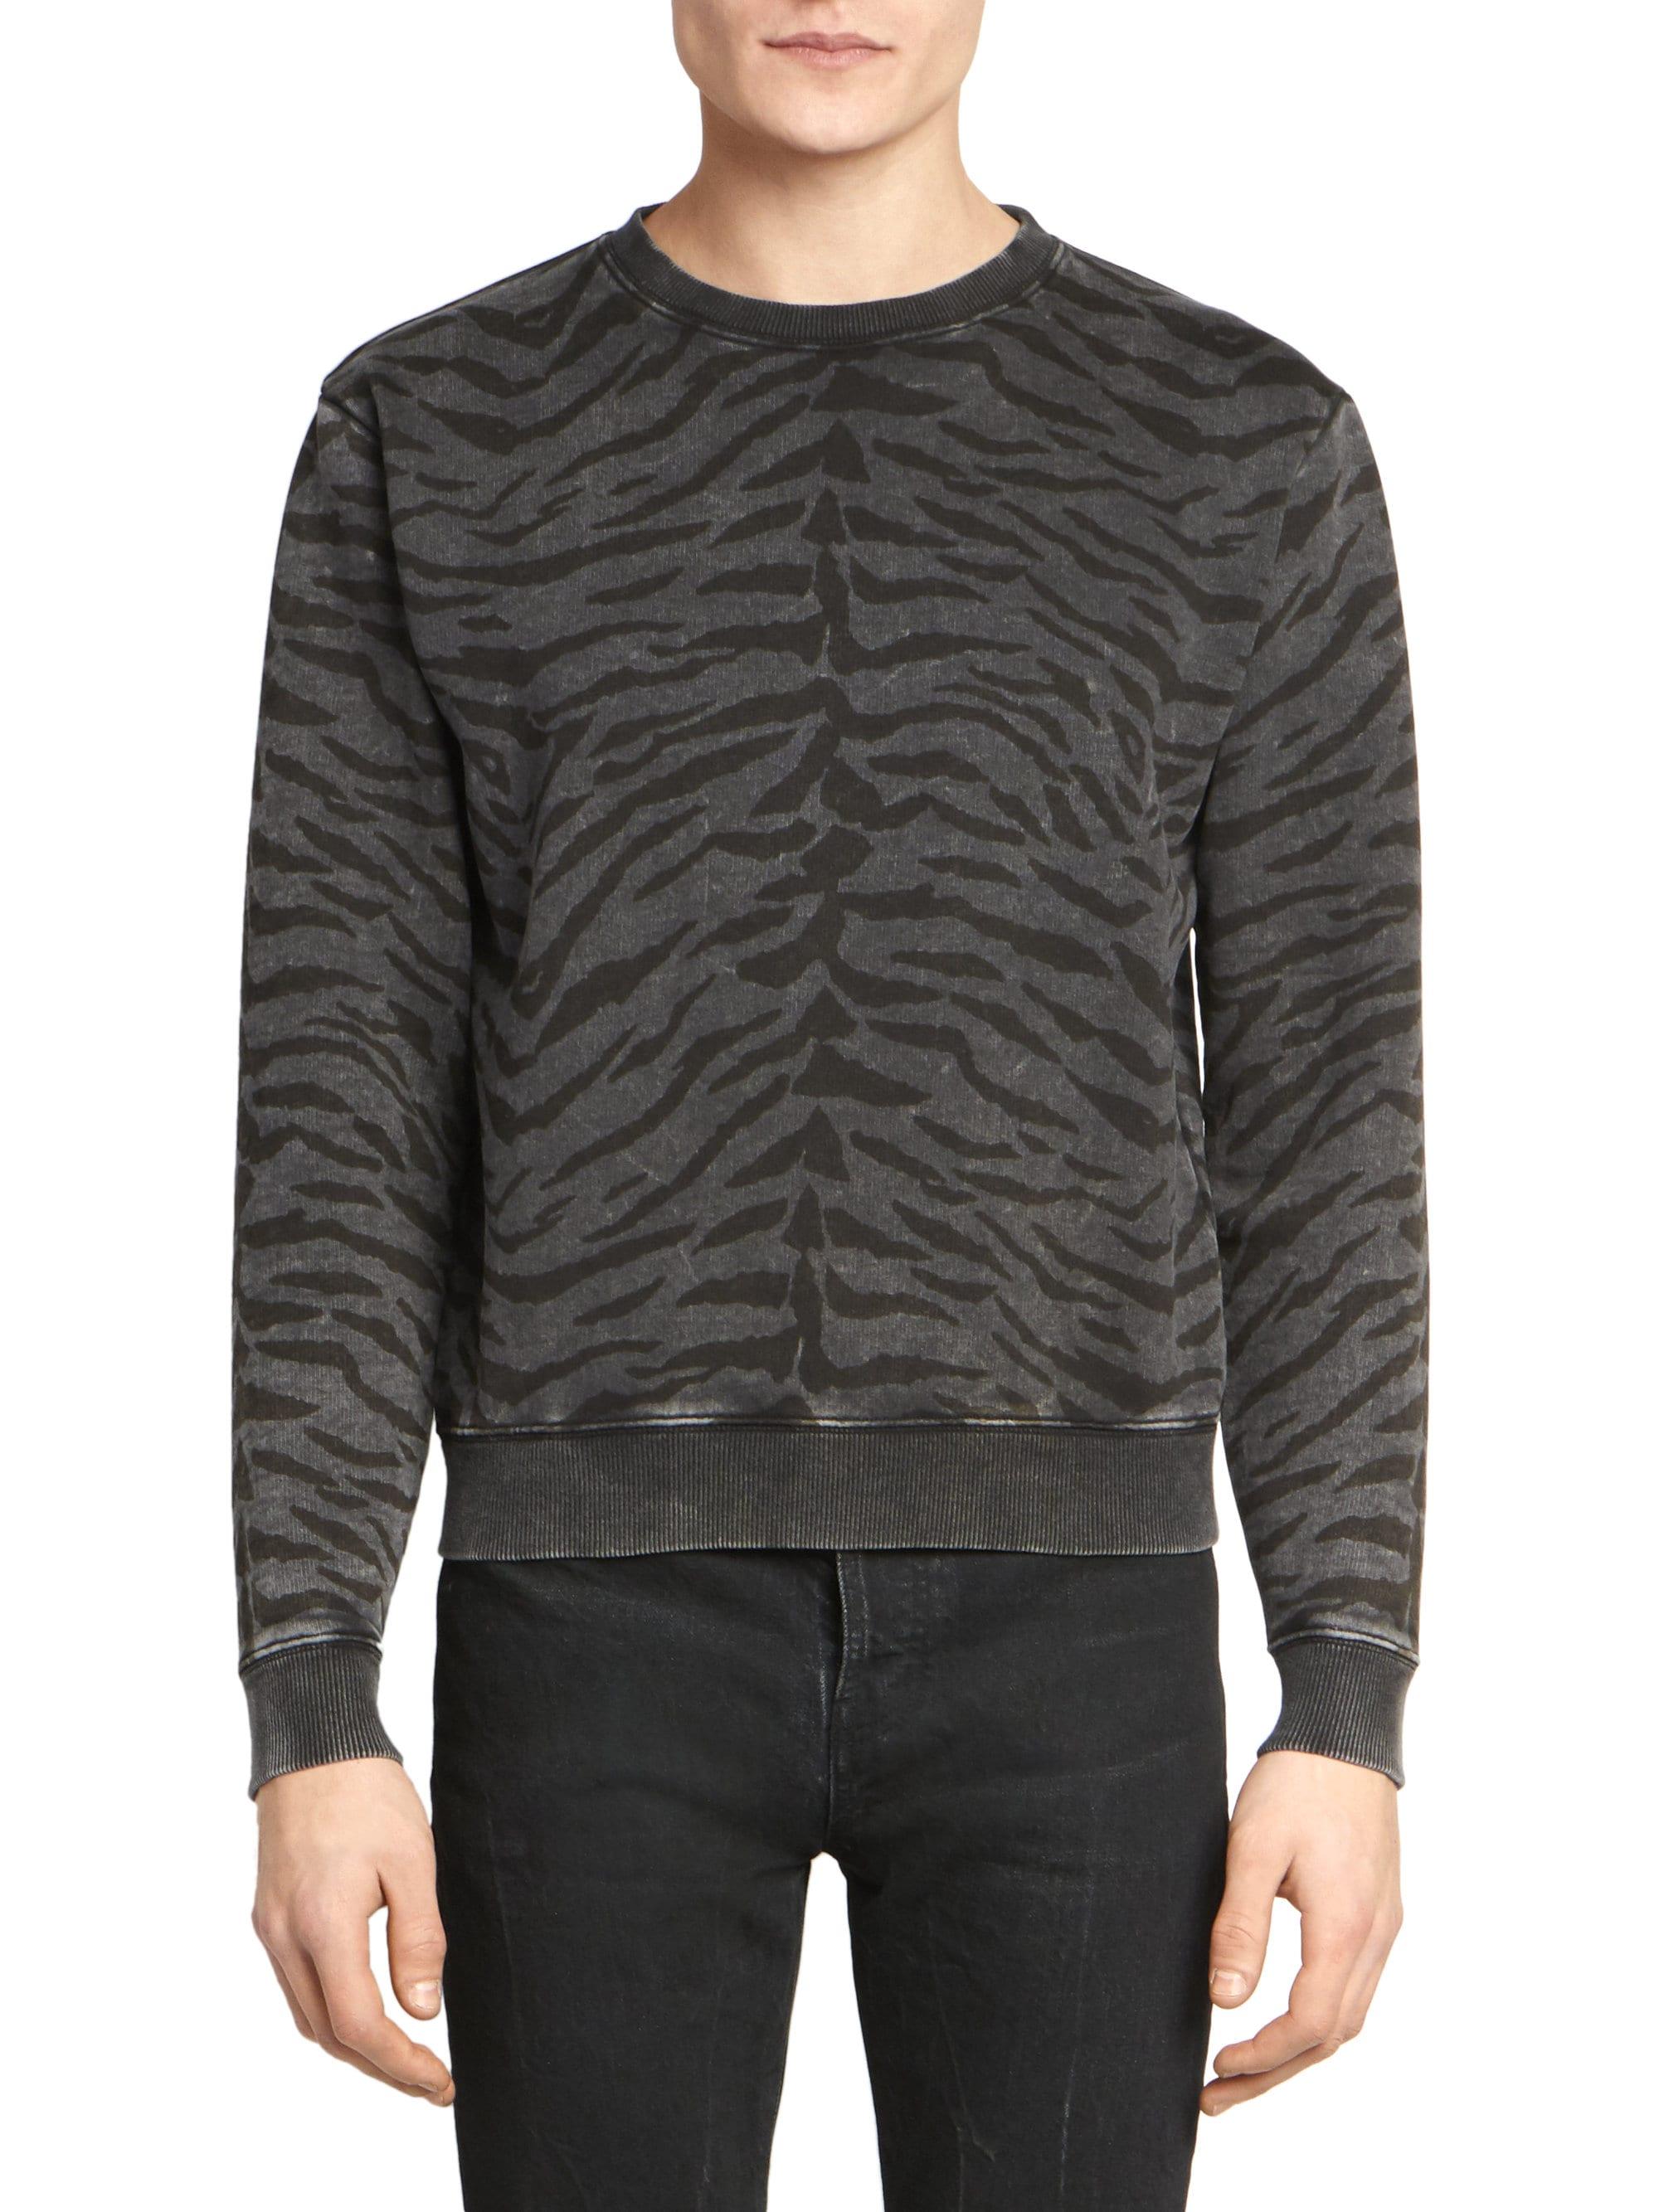 Saint Laurent Zebra Print Sweater in Black for Men - Lyst